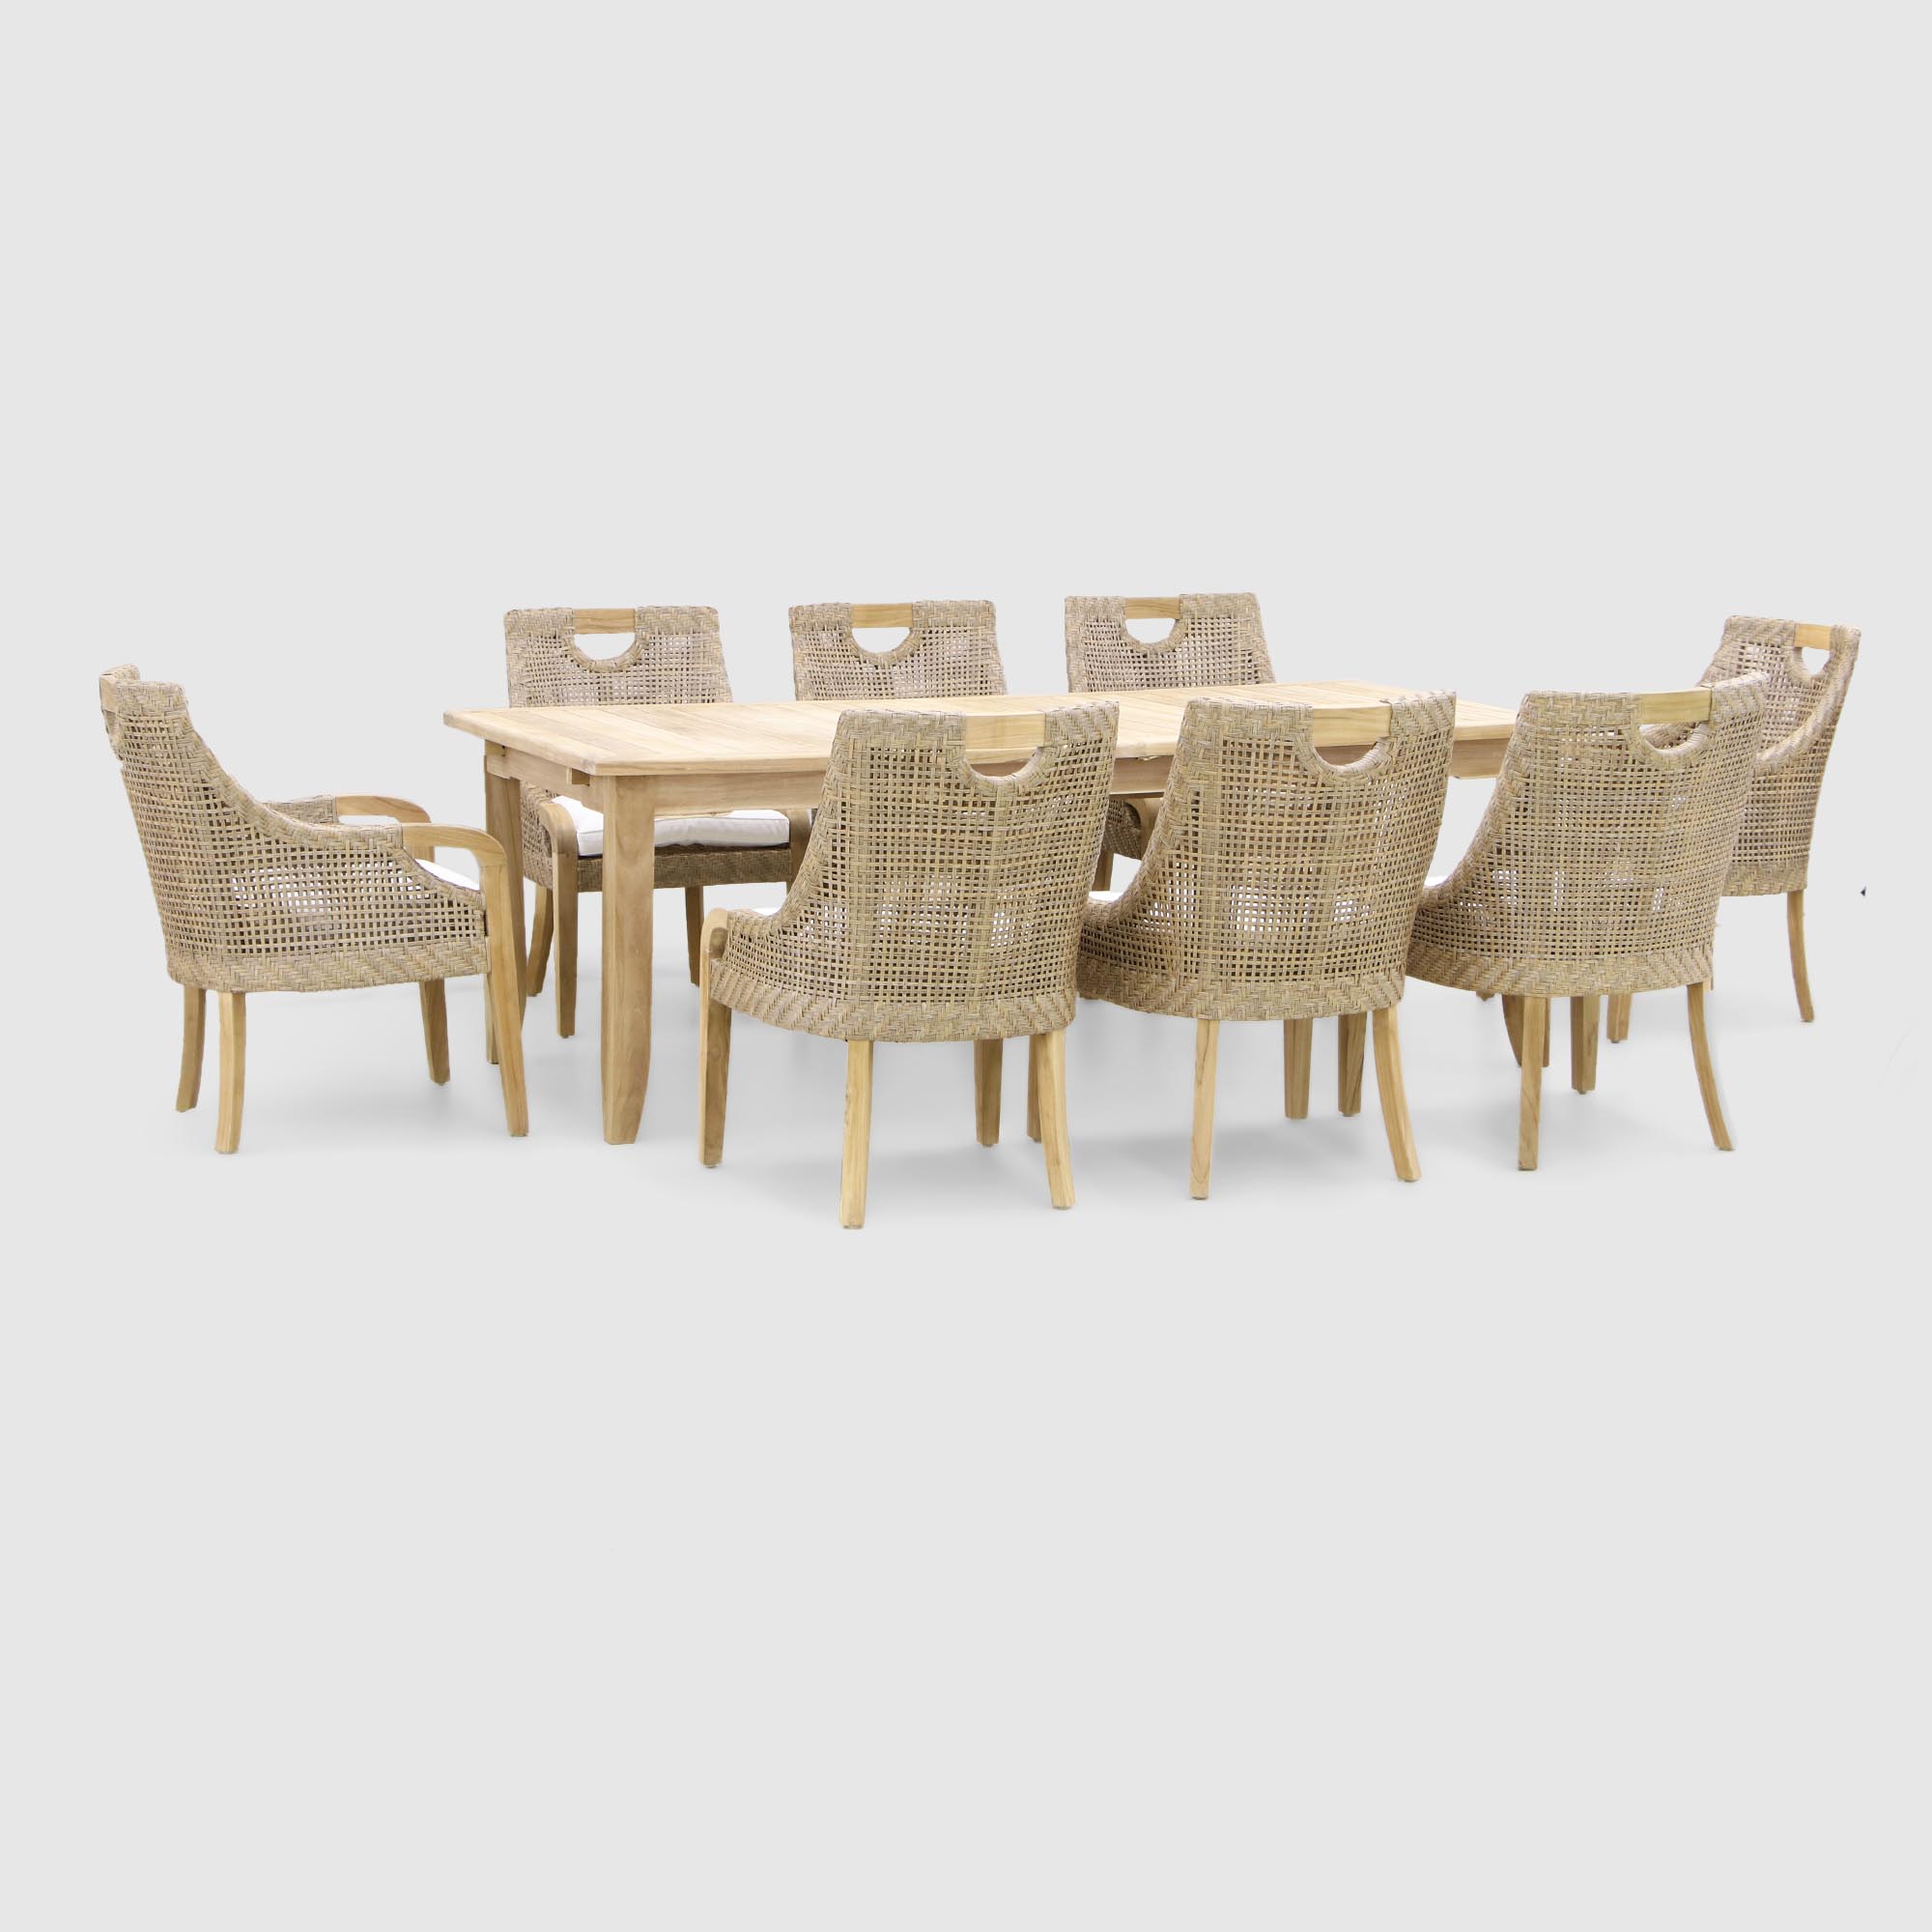 Комплект мебели Jepara curved из 9 предметов (101), цвет светло-коричневый, размер 60х60х90